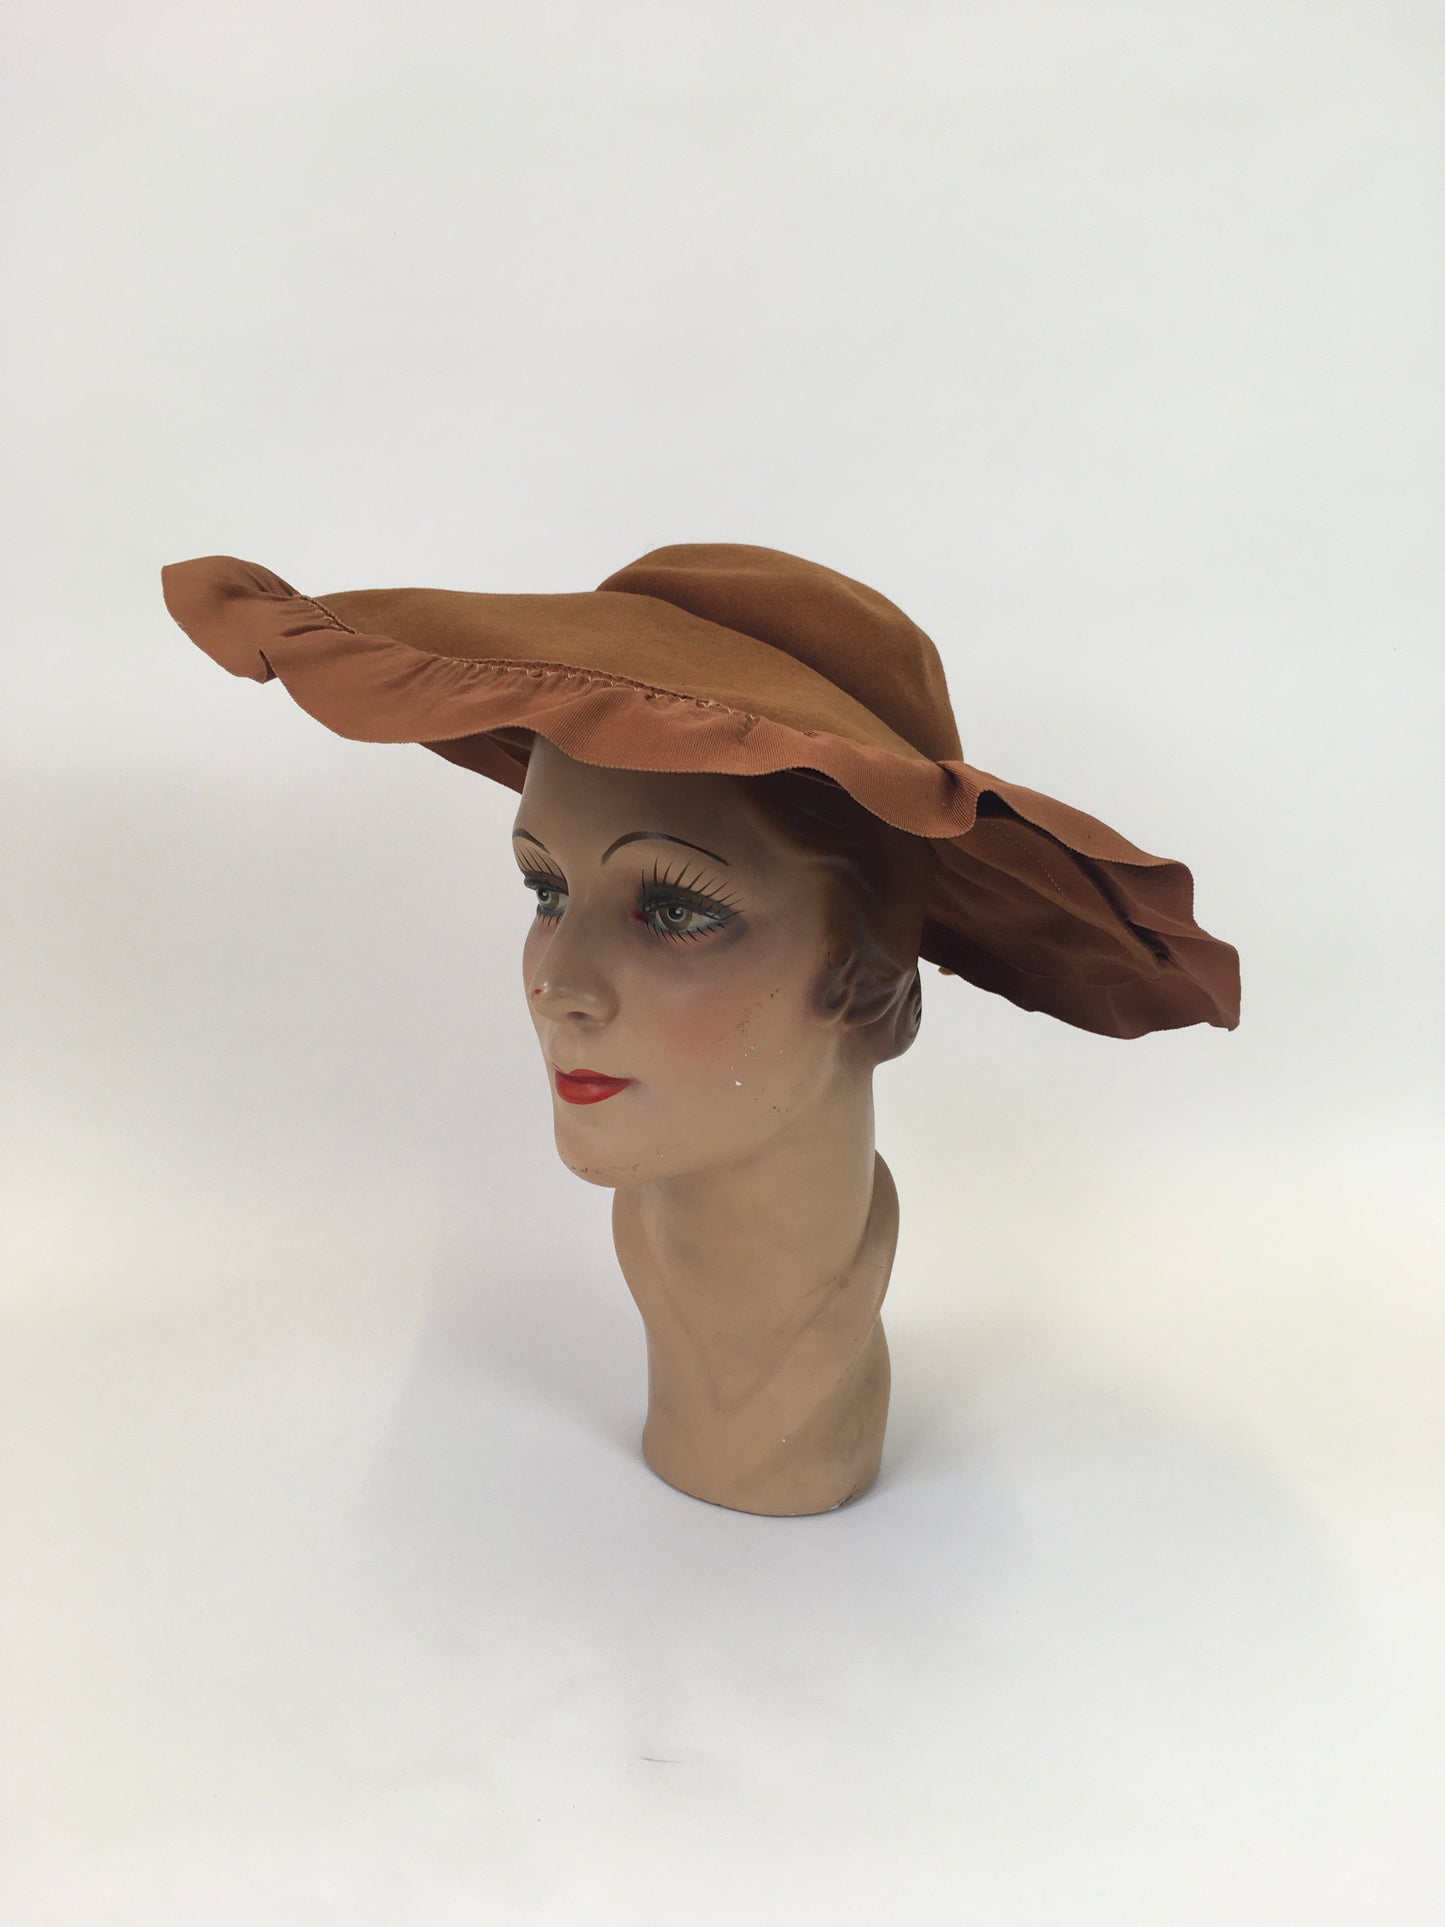 Original 1940's Sensational Brimmed Hat - In Warm Cinnamon With a Ruffled Trim